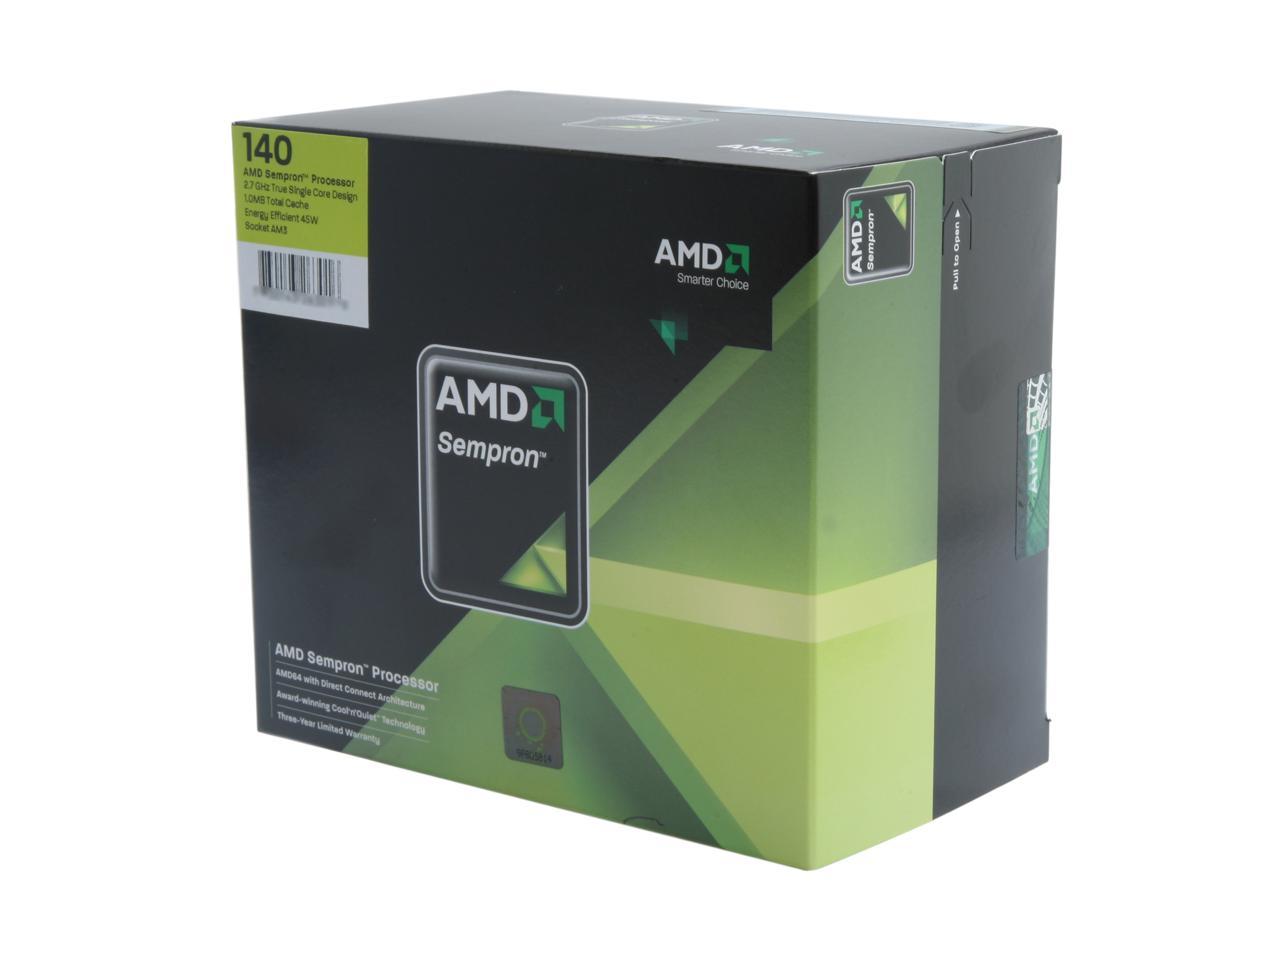 User amd. Процессор AMD Sempron 140. Процессор АМД семпрон 2009. Процессор AMD Sempron 140 Sargas am3. AMD Sempron 145.